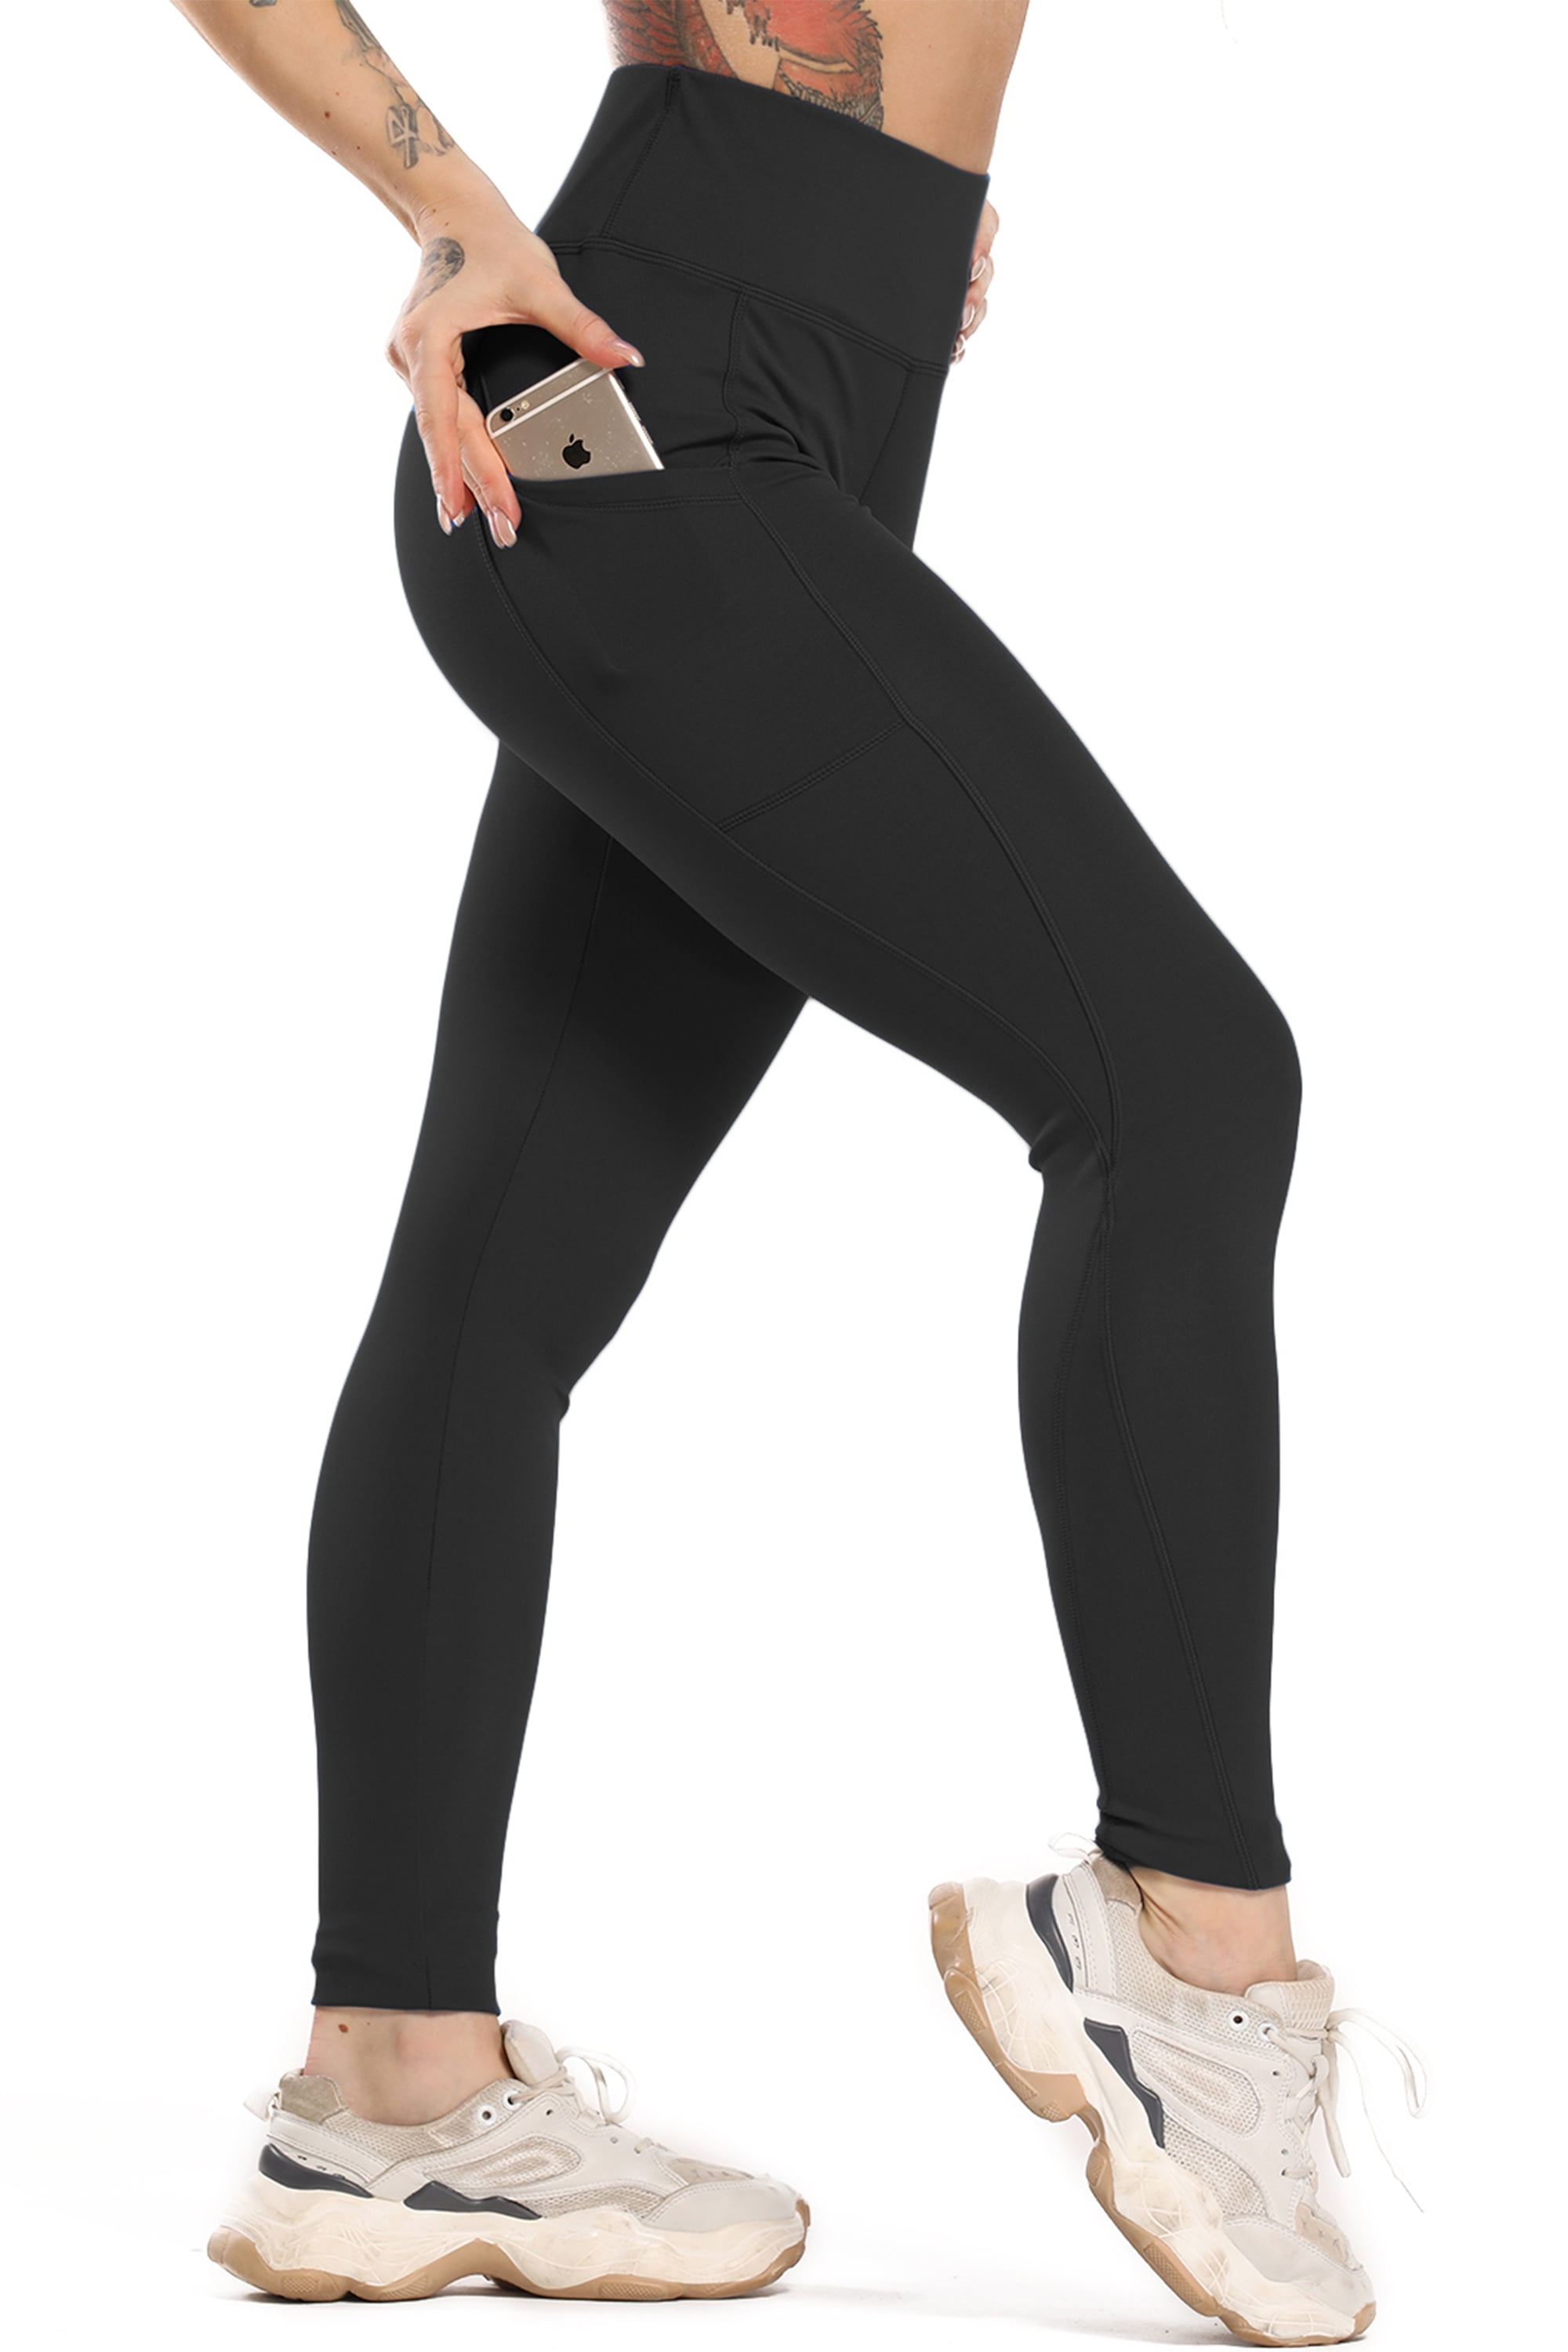 GetUSCart- PHISOCKAT High Waist Yoga Pants with Pockets, Tummy Control Yoga  Pants for Women, Workout 4 Way Stretch Yoga Leggings (Wine, Medium)